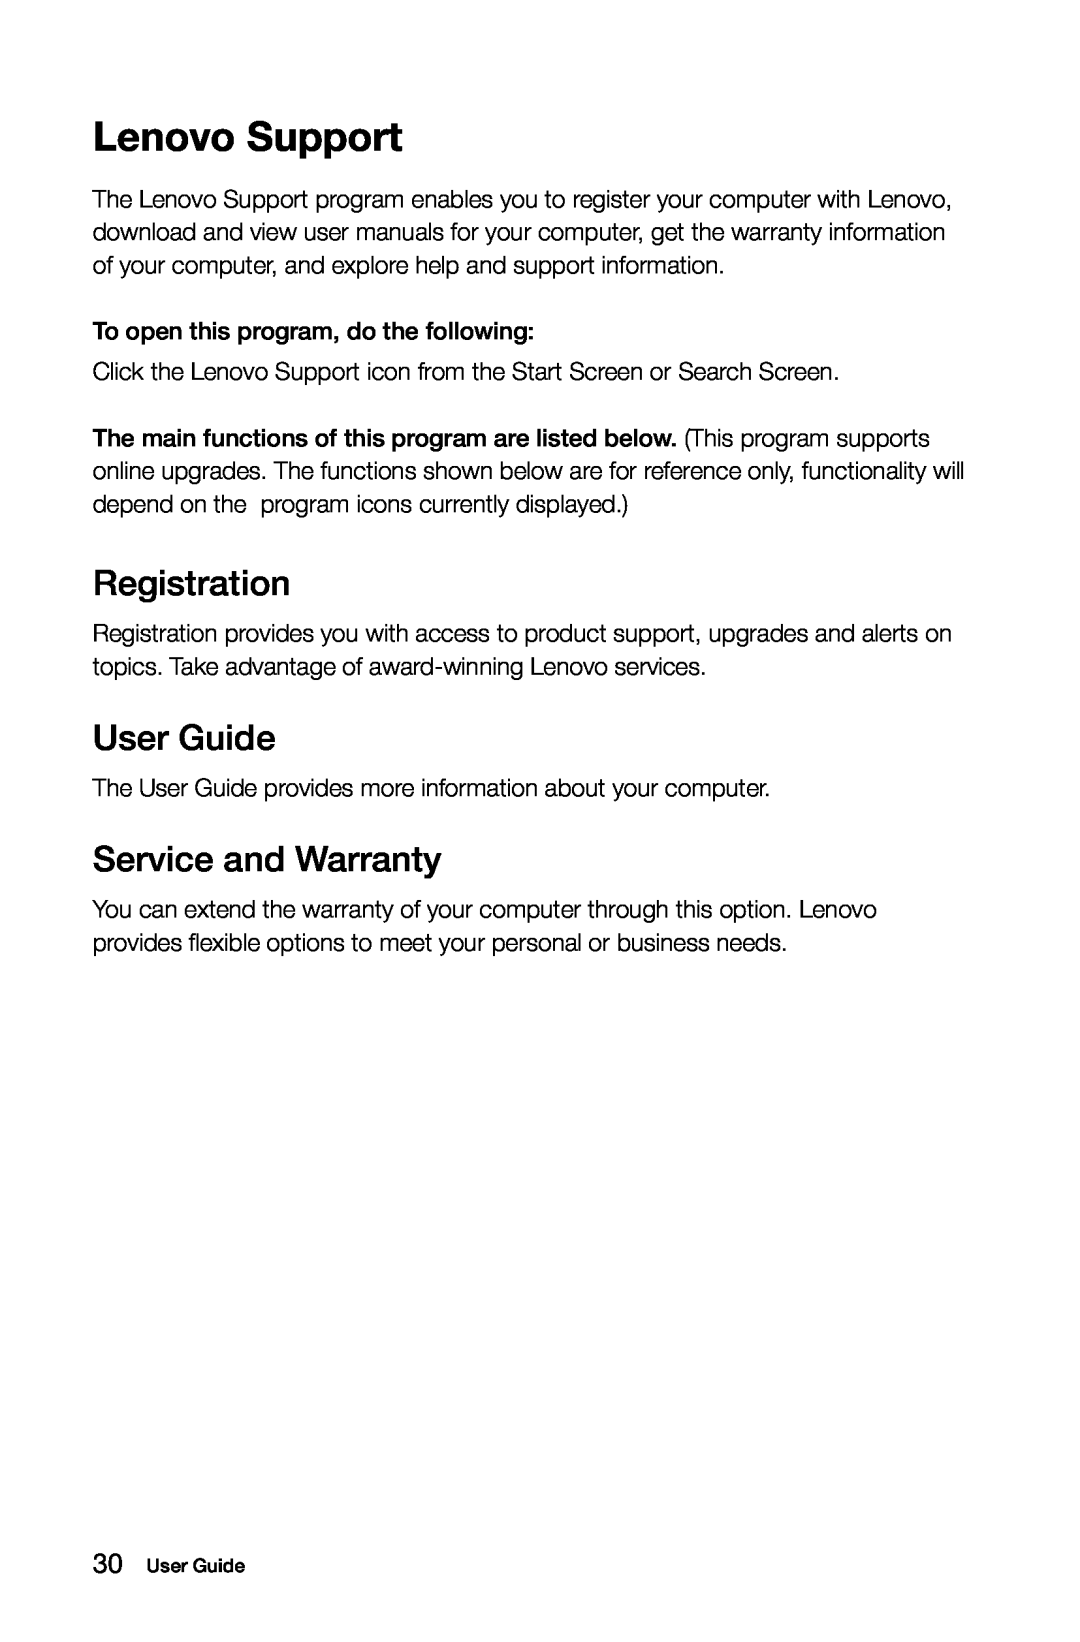 Lenovo 10121/90A1 [K450 ES], 10120/90A0 [K450 NON-ES] manual Lenovo Support, Registration, User Guide, Service and Warranty 